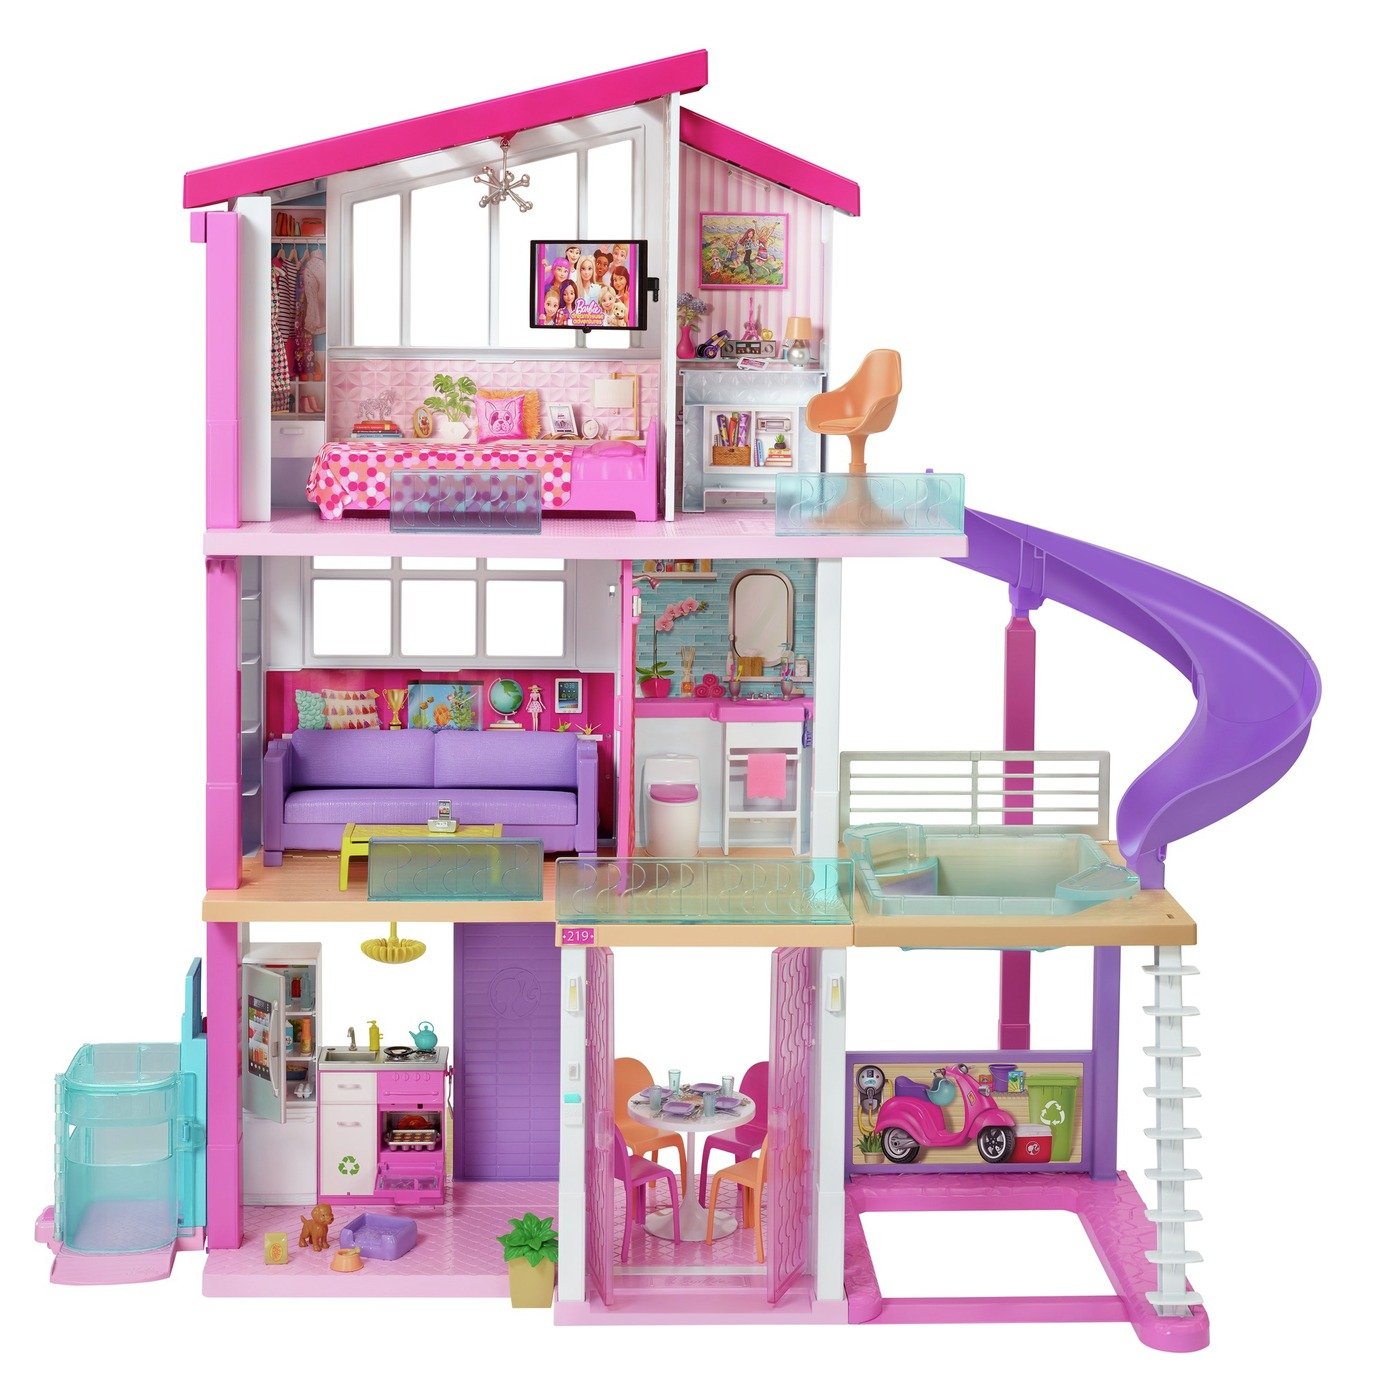 Buy Barbie Dreamhouse Dollhouse with 